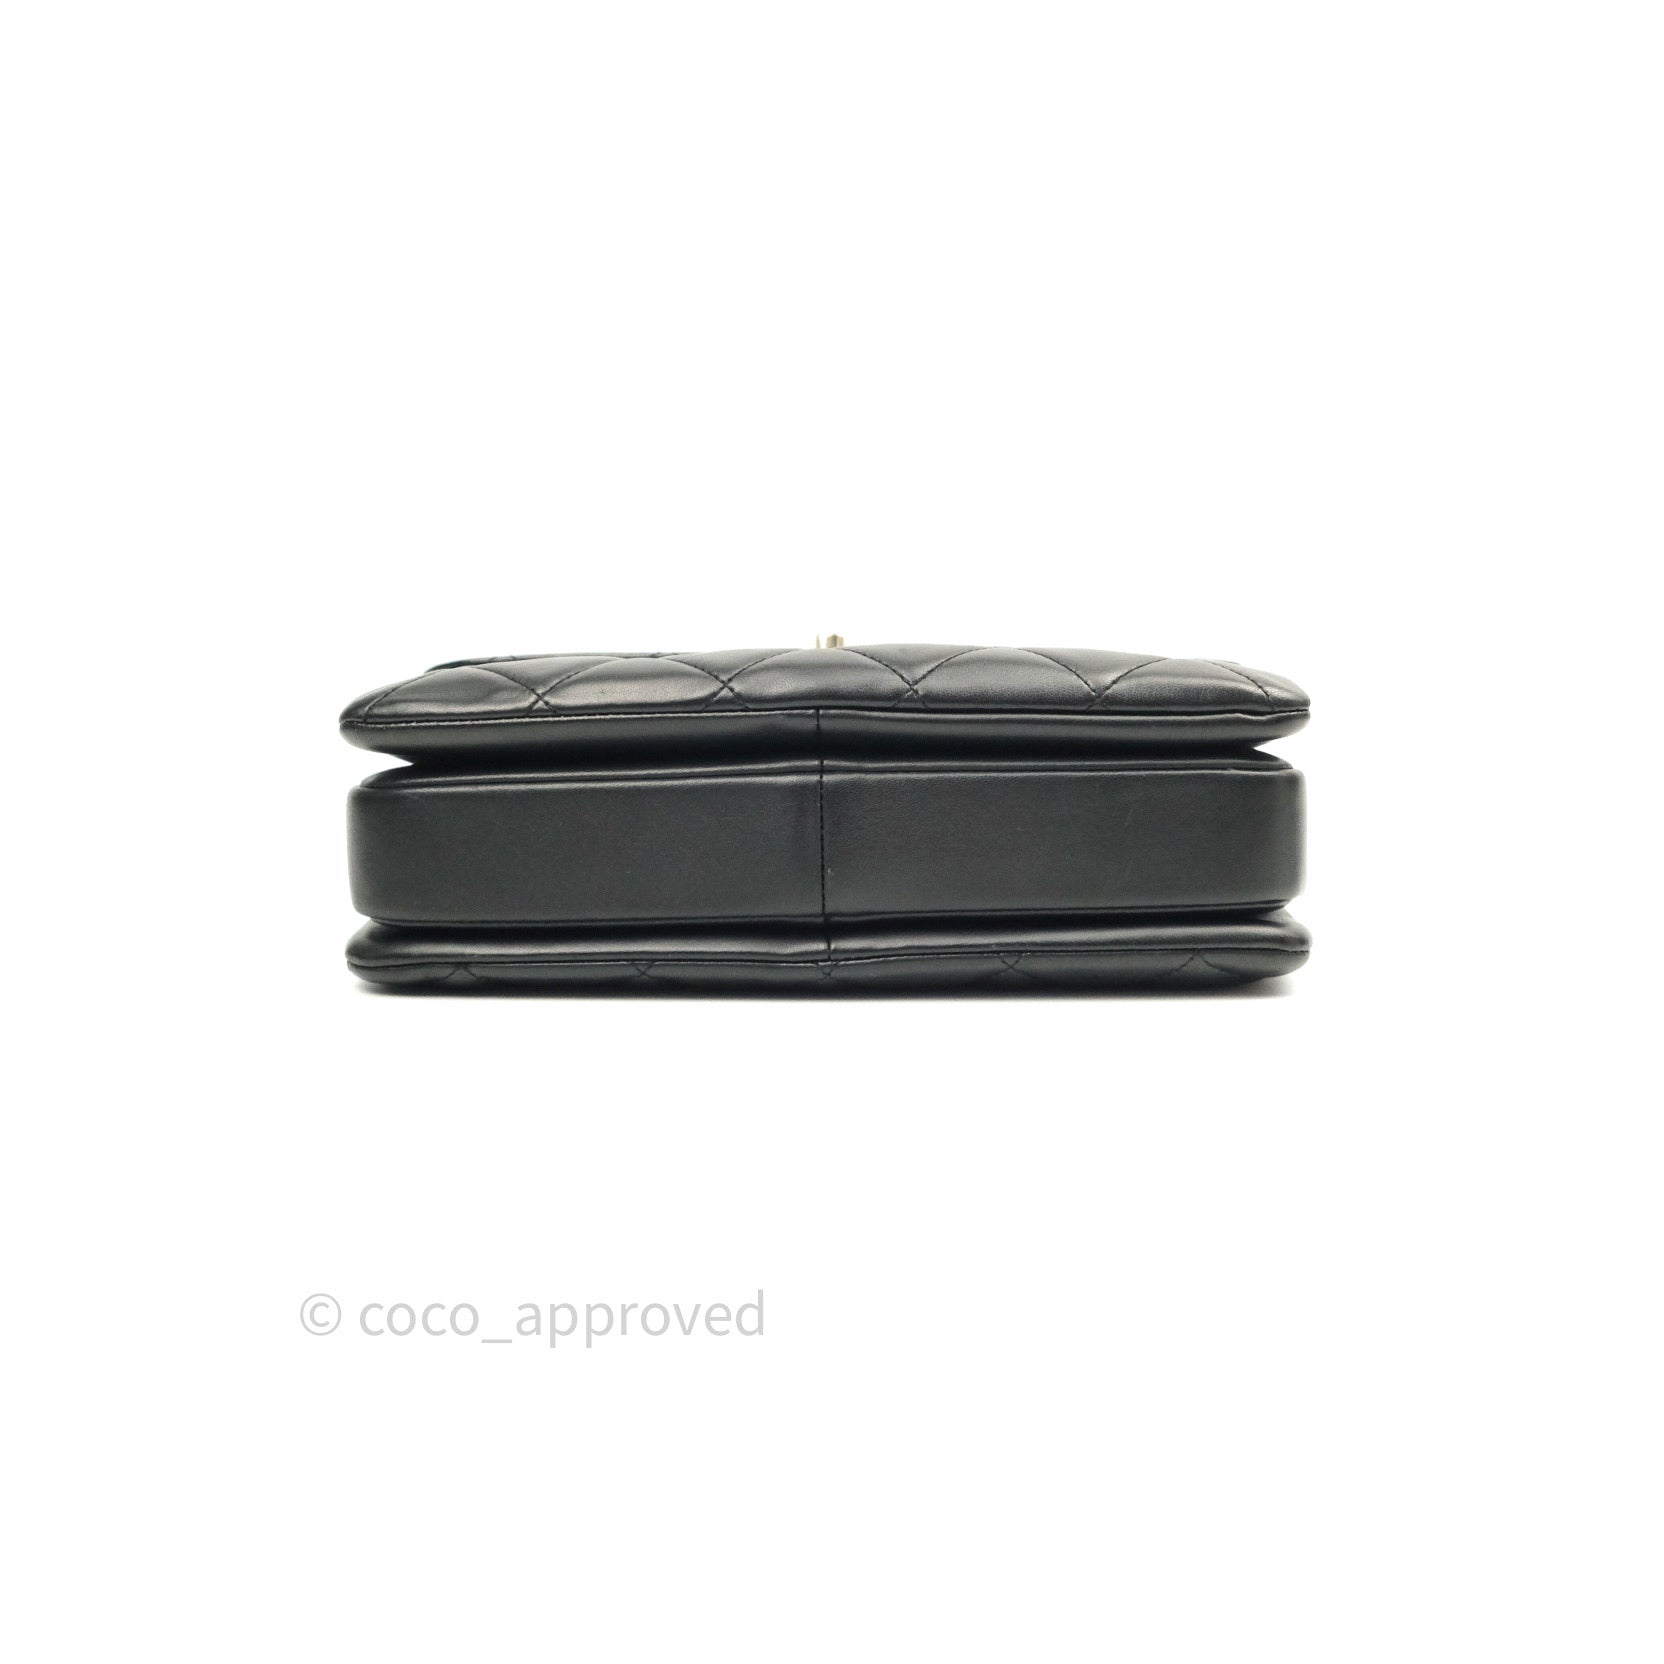 Chanel 22B Trendy CC mini woc 6” so black มันว้าวมาก #chanel #22b #woc  #walletonchain #review 